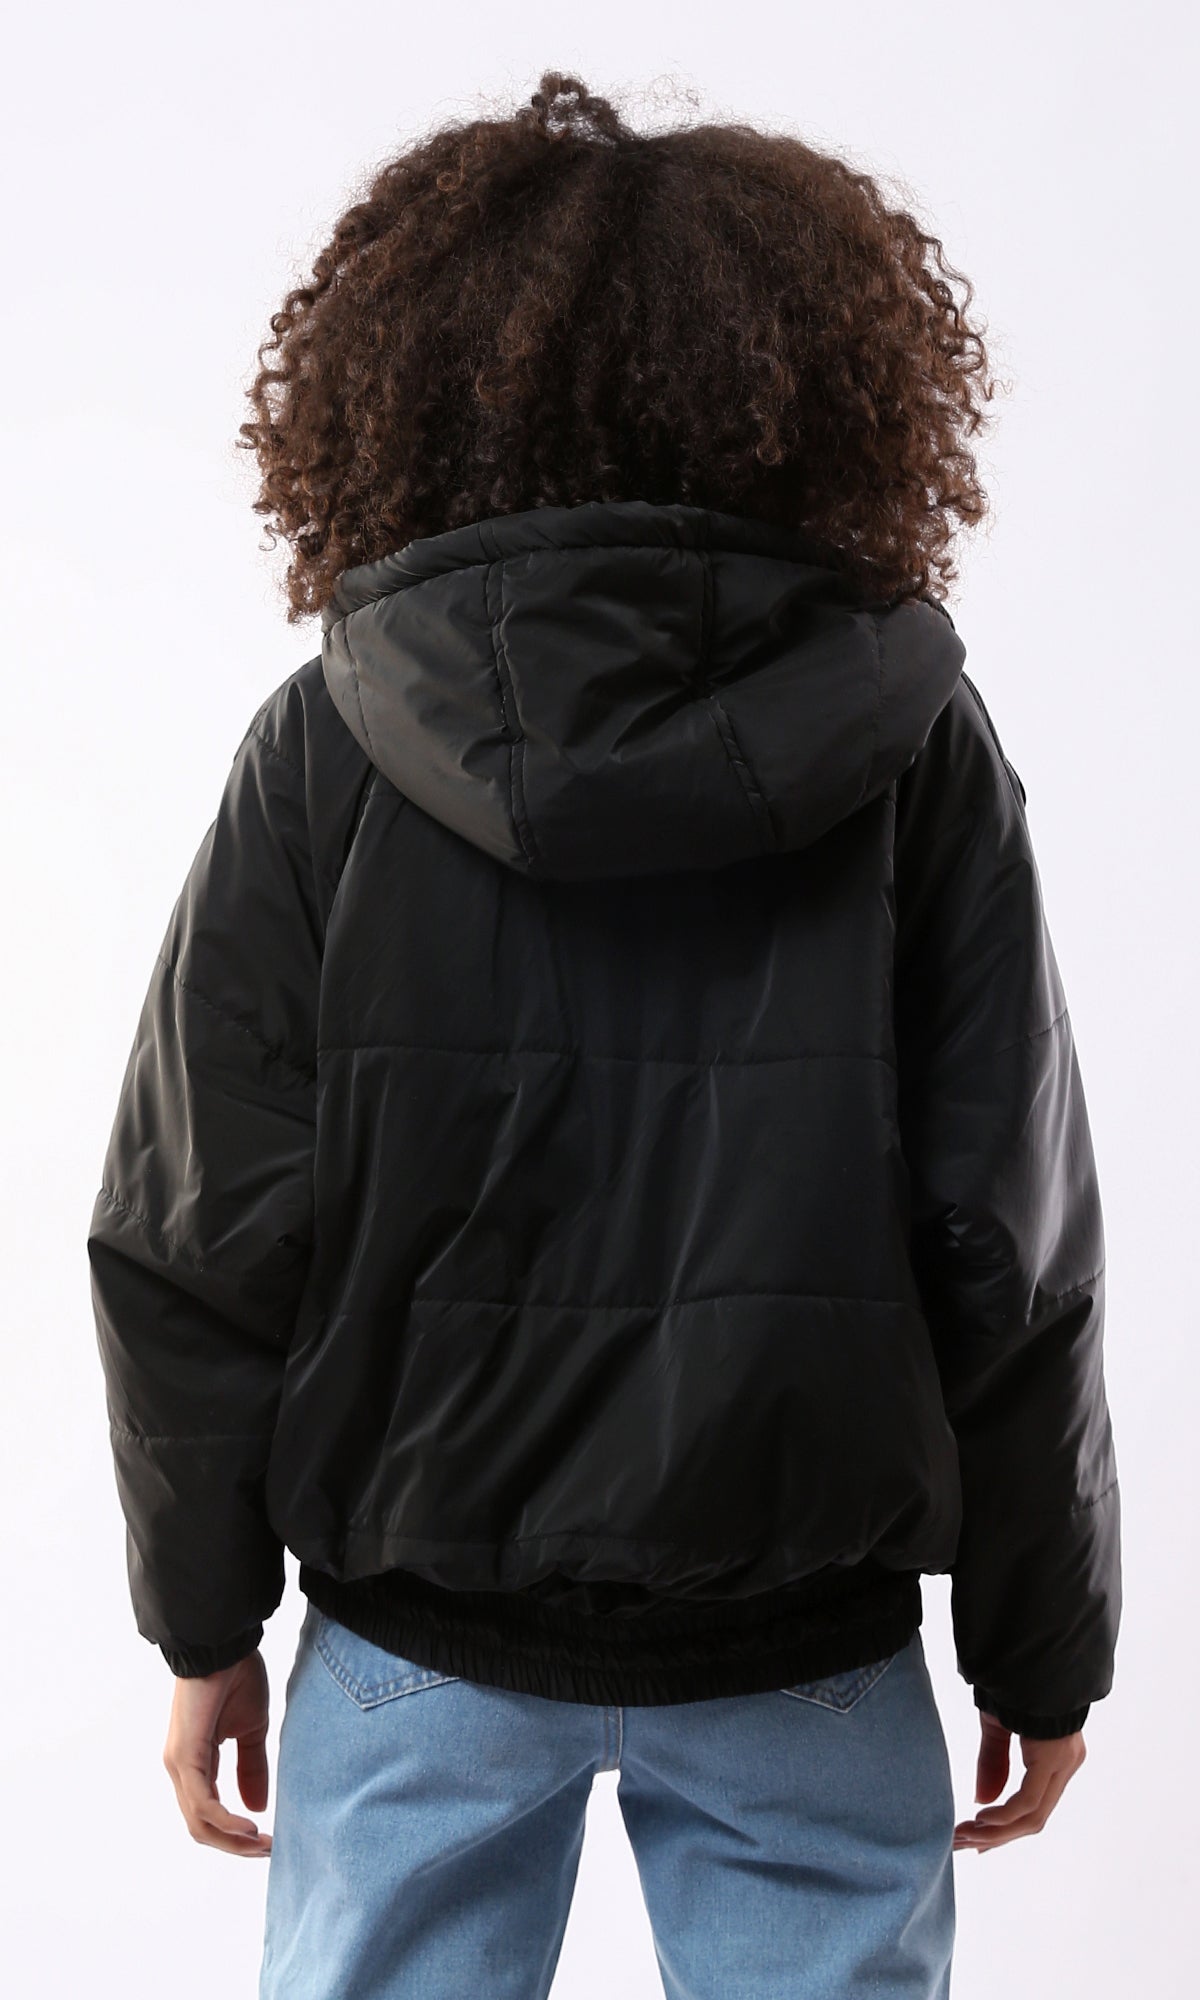 O173805 Double Closure Black Solid Waterproof Jacket